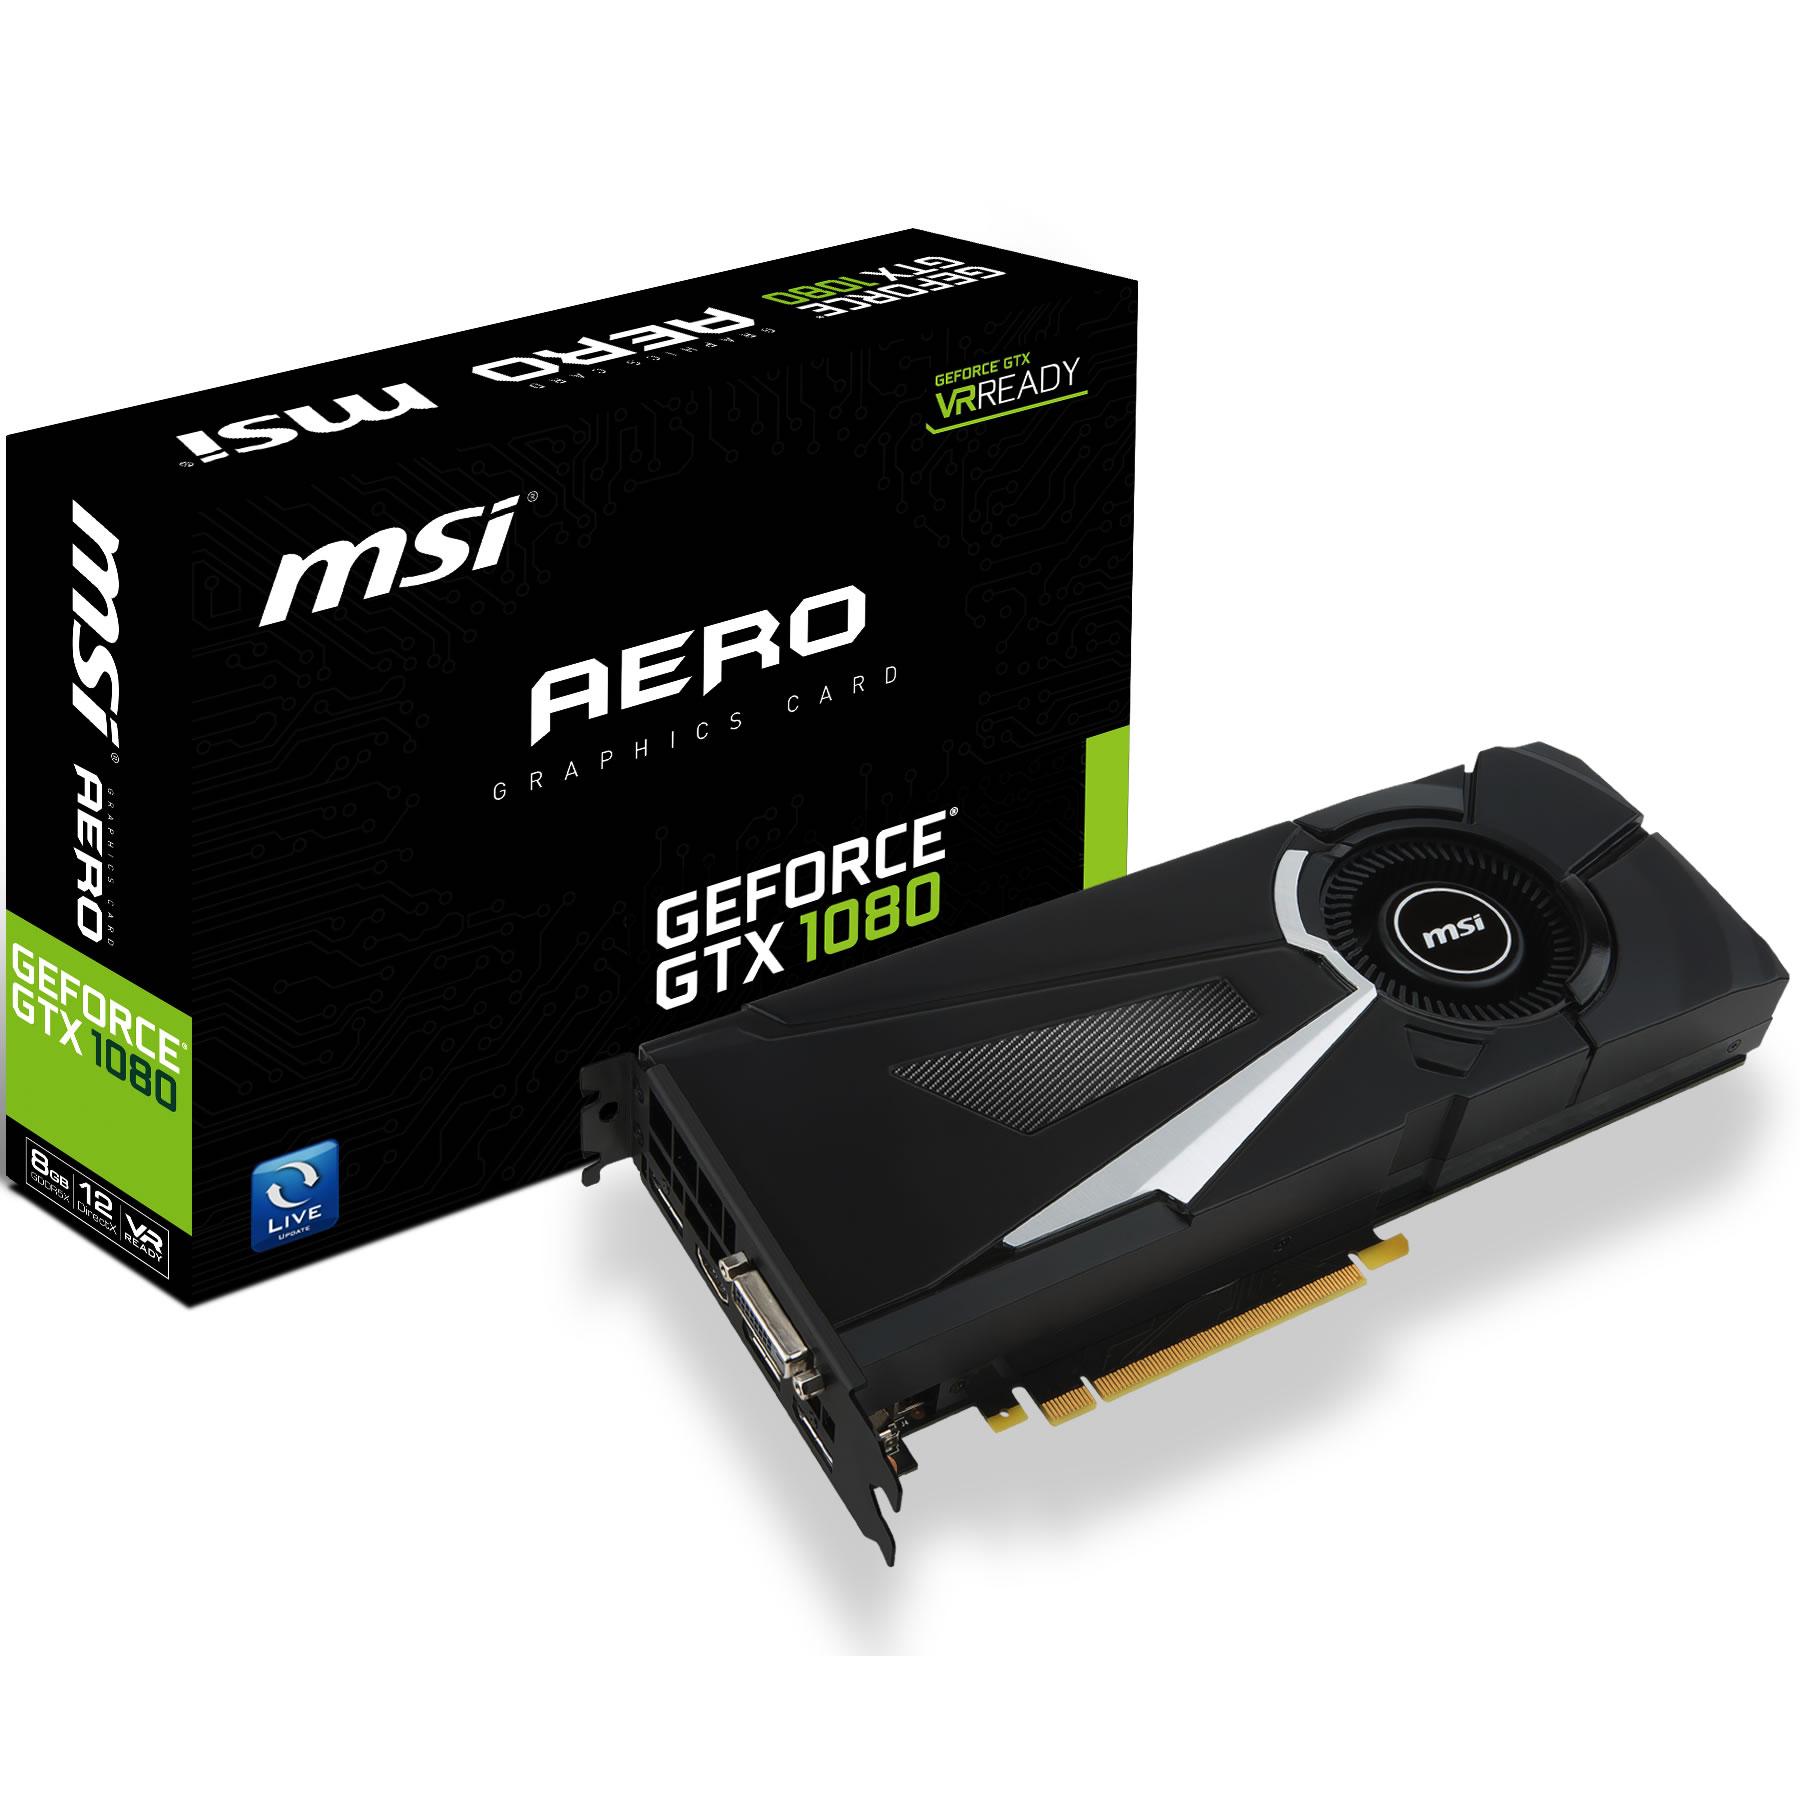 Card đồ họa MSI AERO GeForce GTX 1080 8GB slide image 0